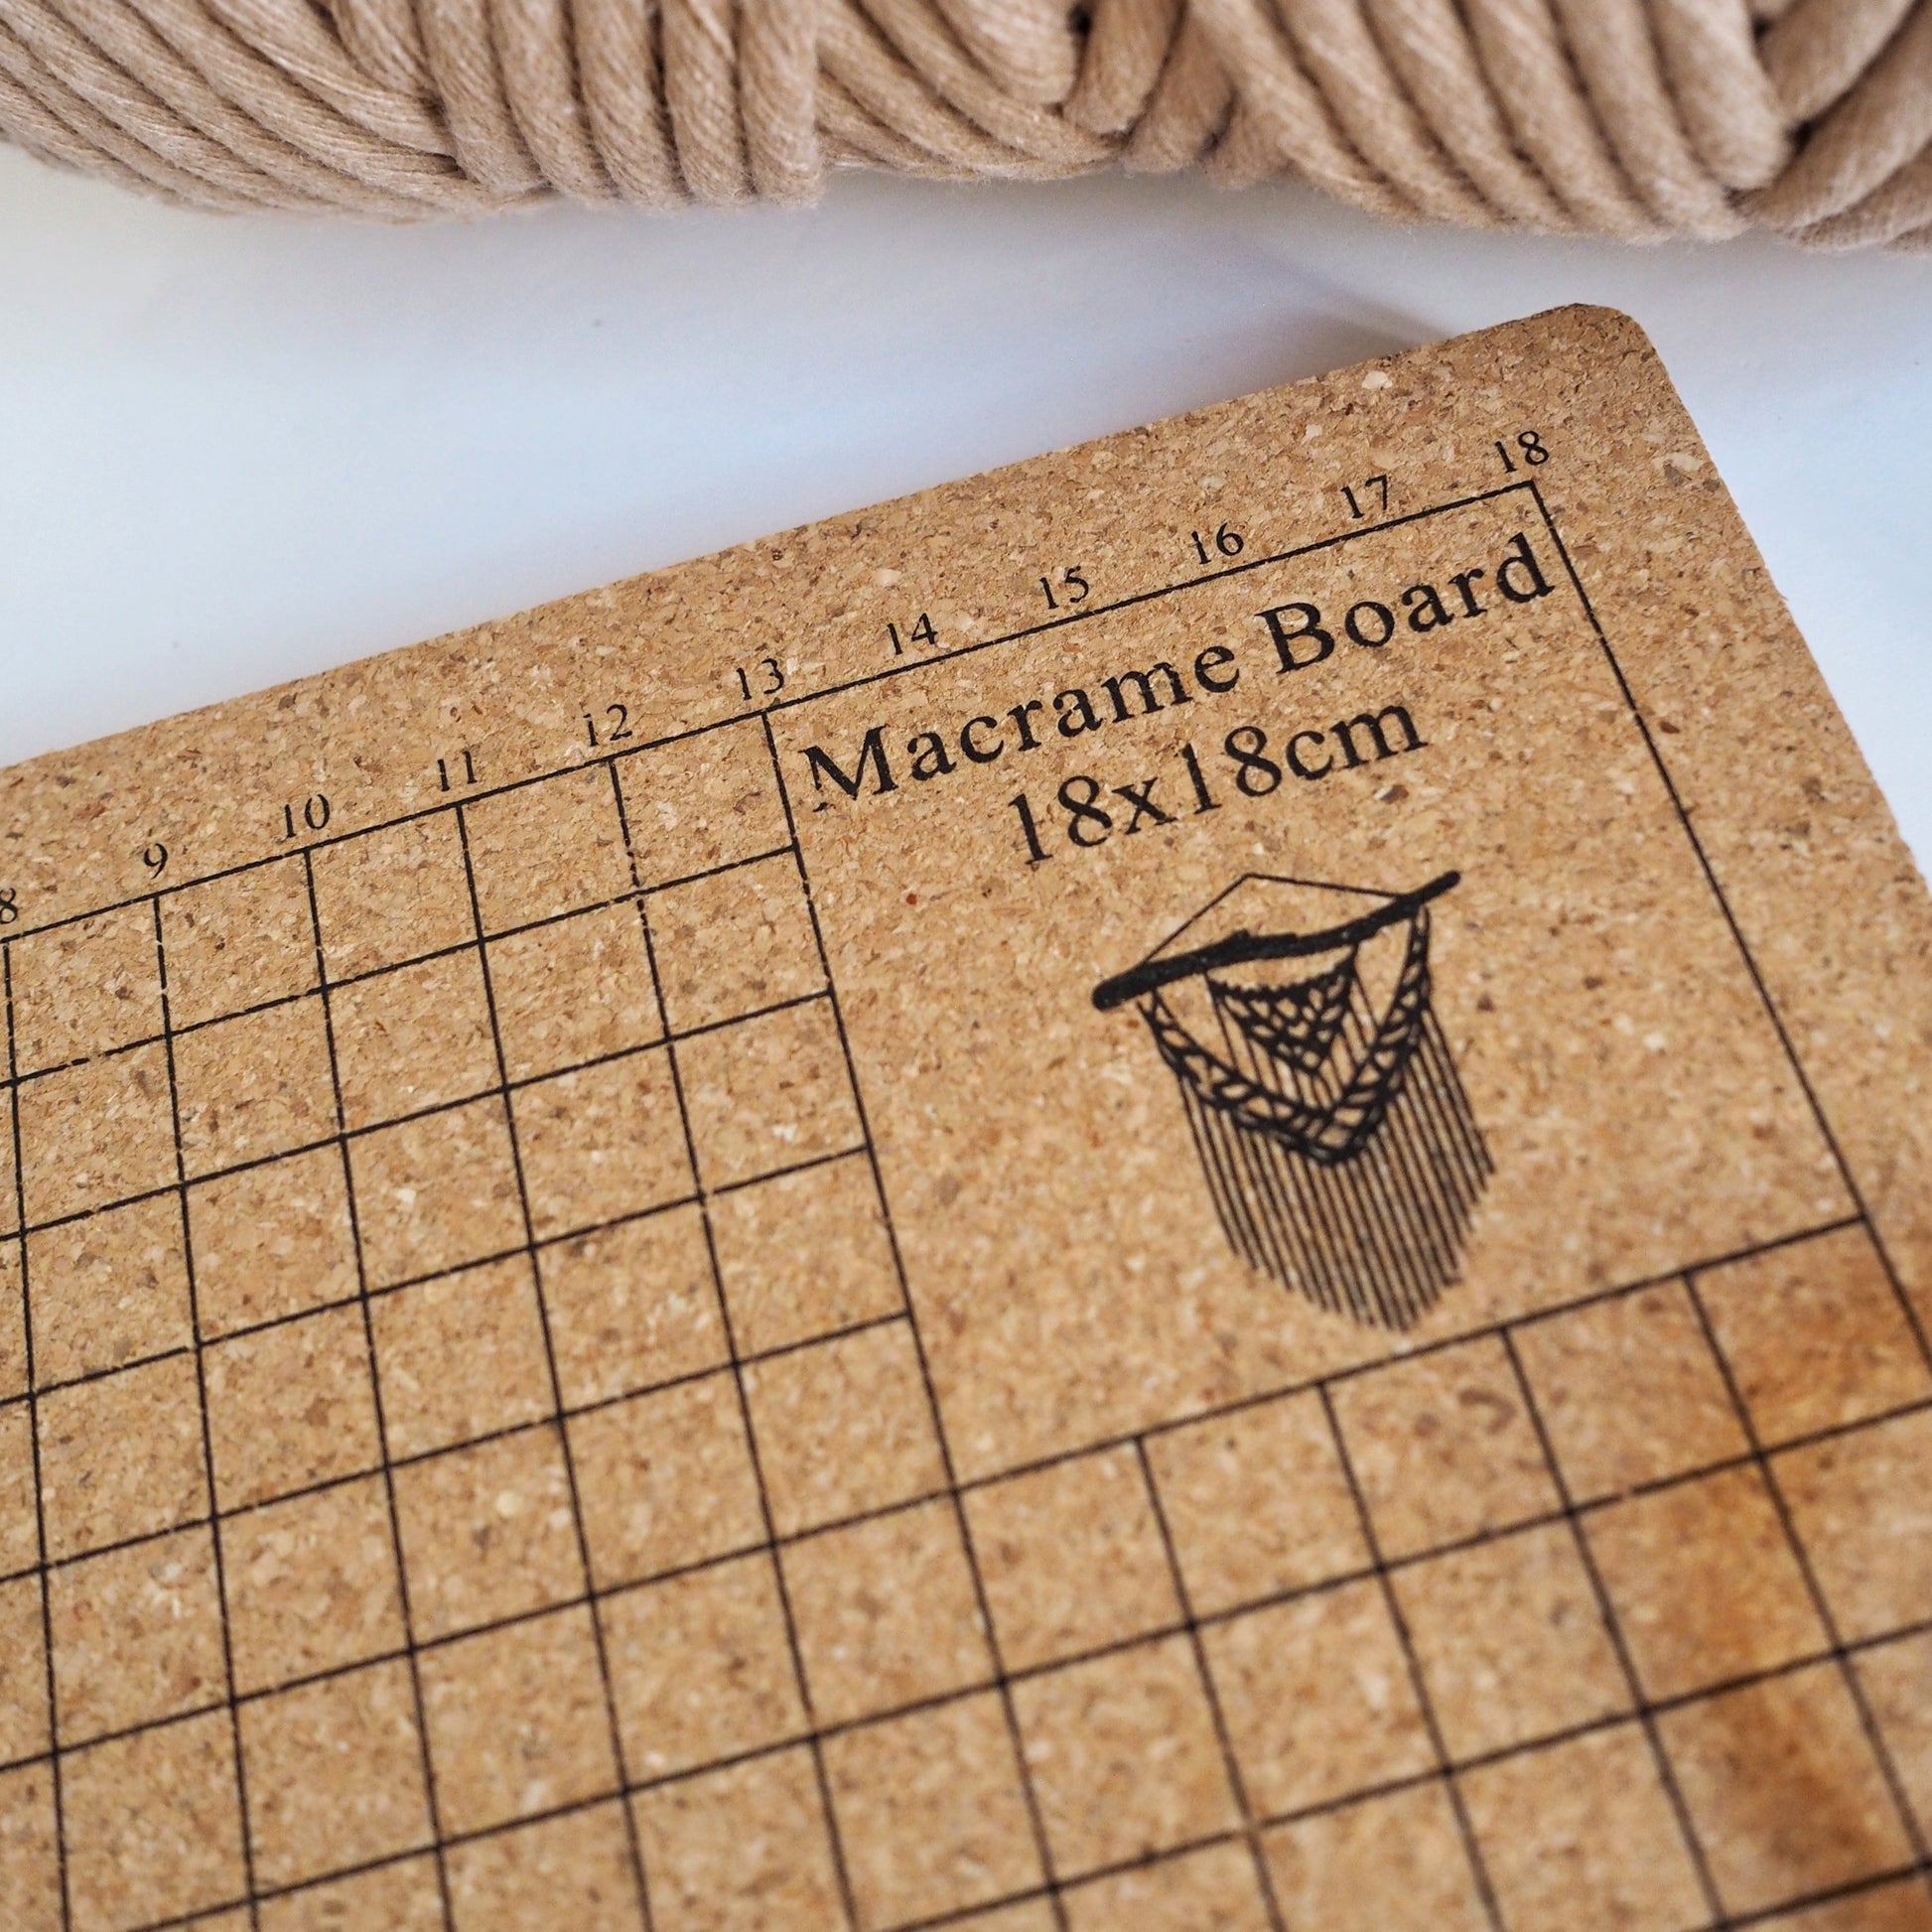 Macrame Cork Boards | 3 sizes The Joyful Studio